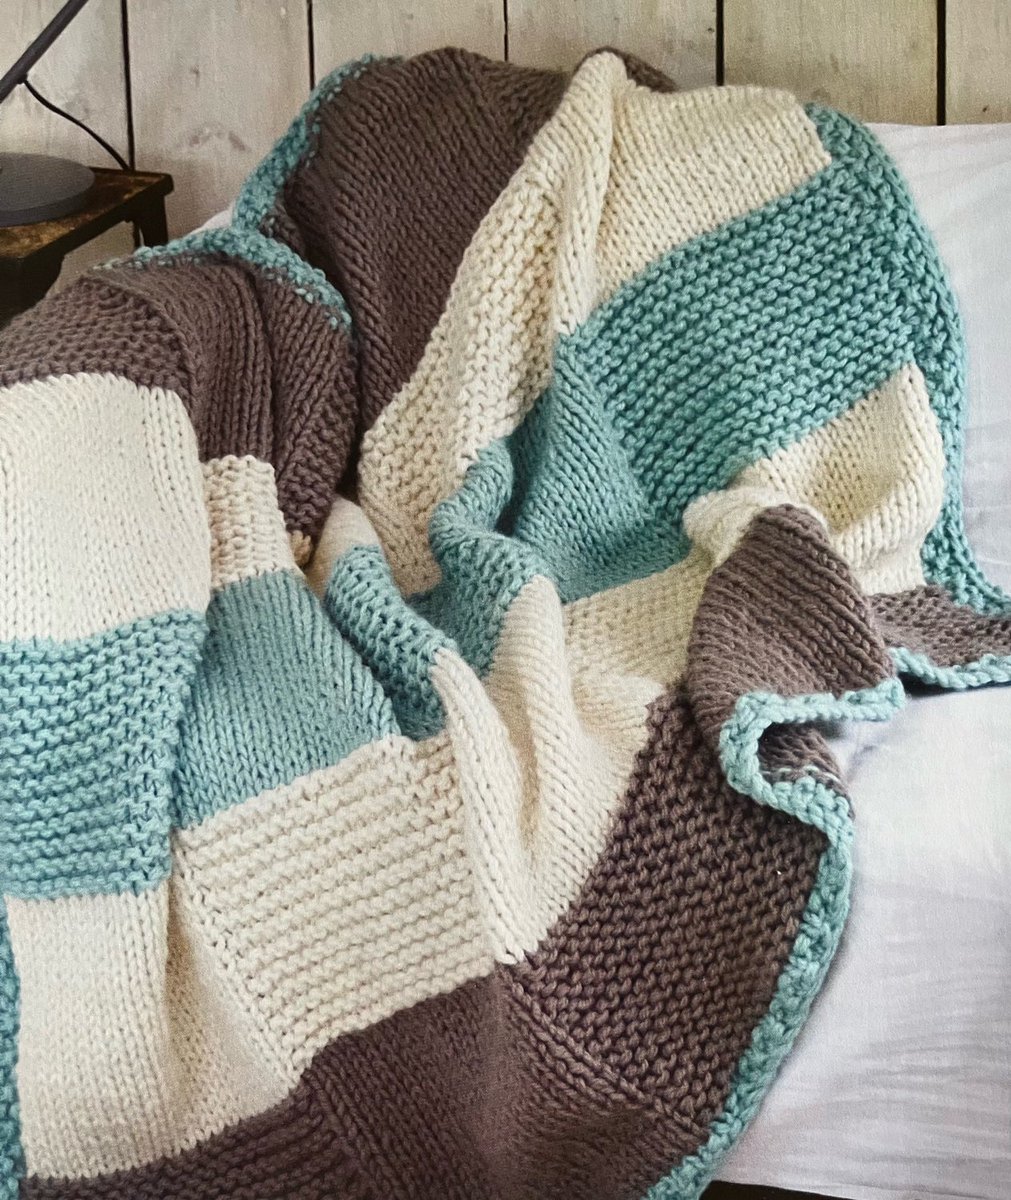 Knitted Chunky Check Blanket Knitting Pattern #knitting #knit #sewing #knittingpattern #chunkyblanket #yarnblanket #knittedblanket #throw #warm #makeone #blankets etsy.me/3tLnehz